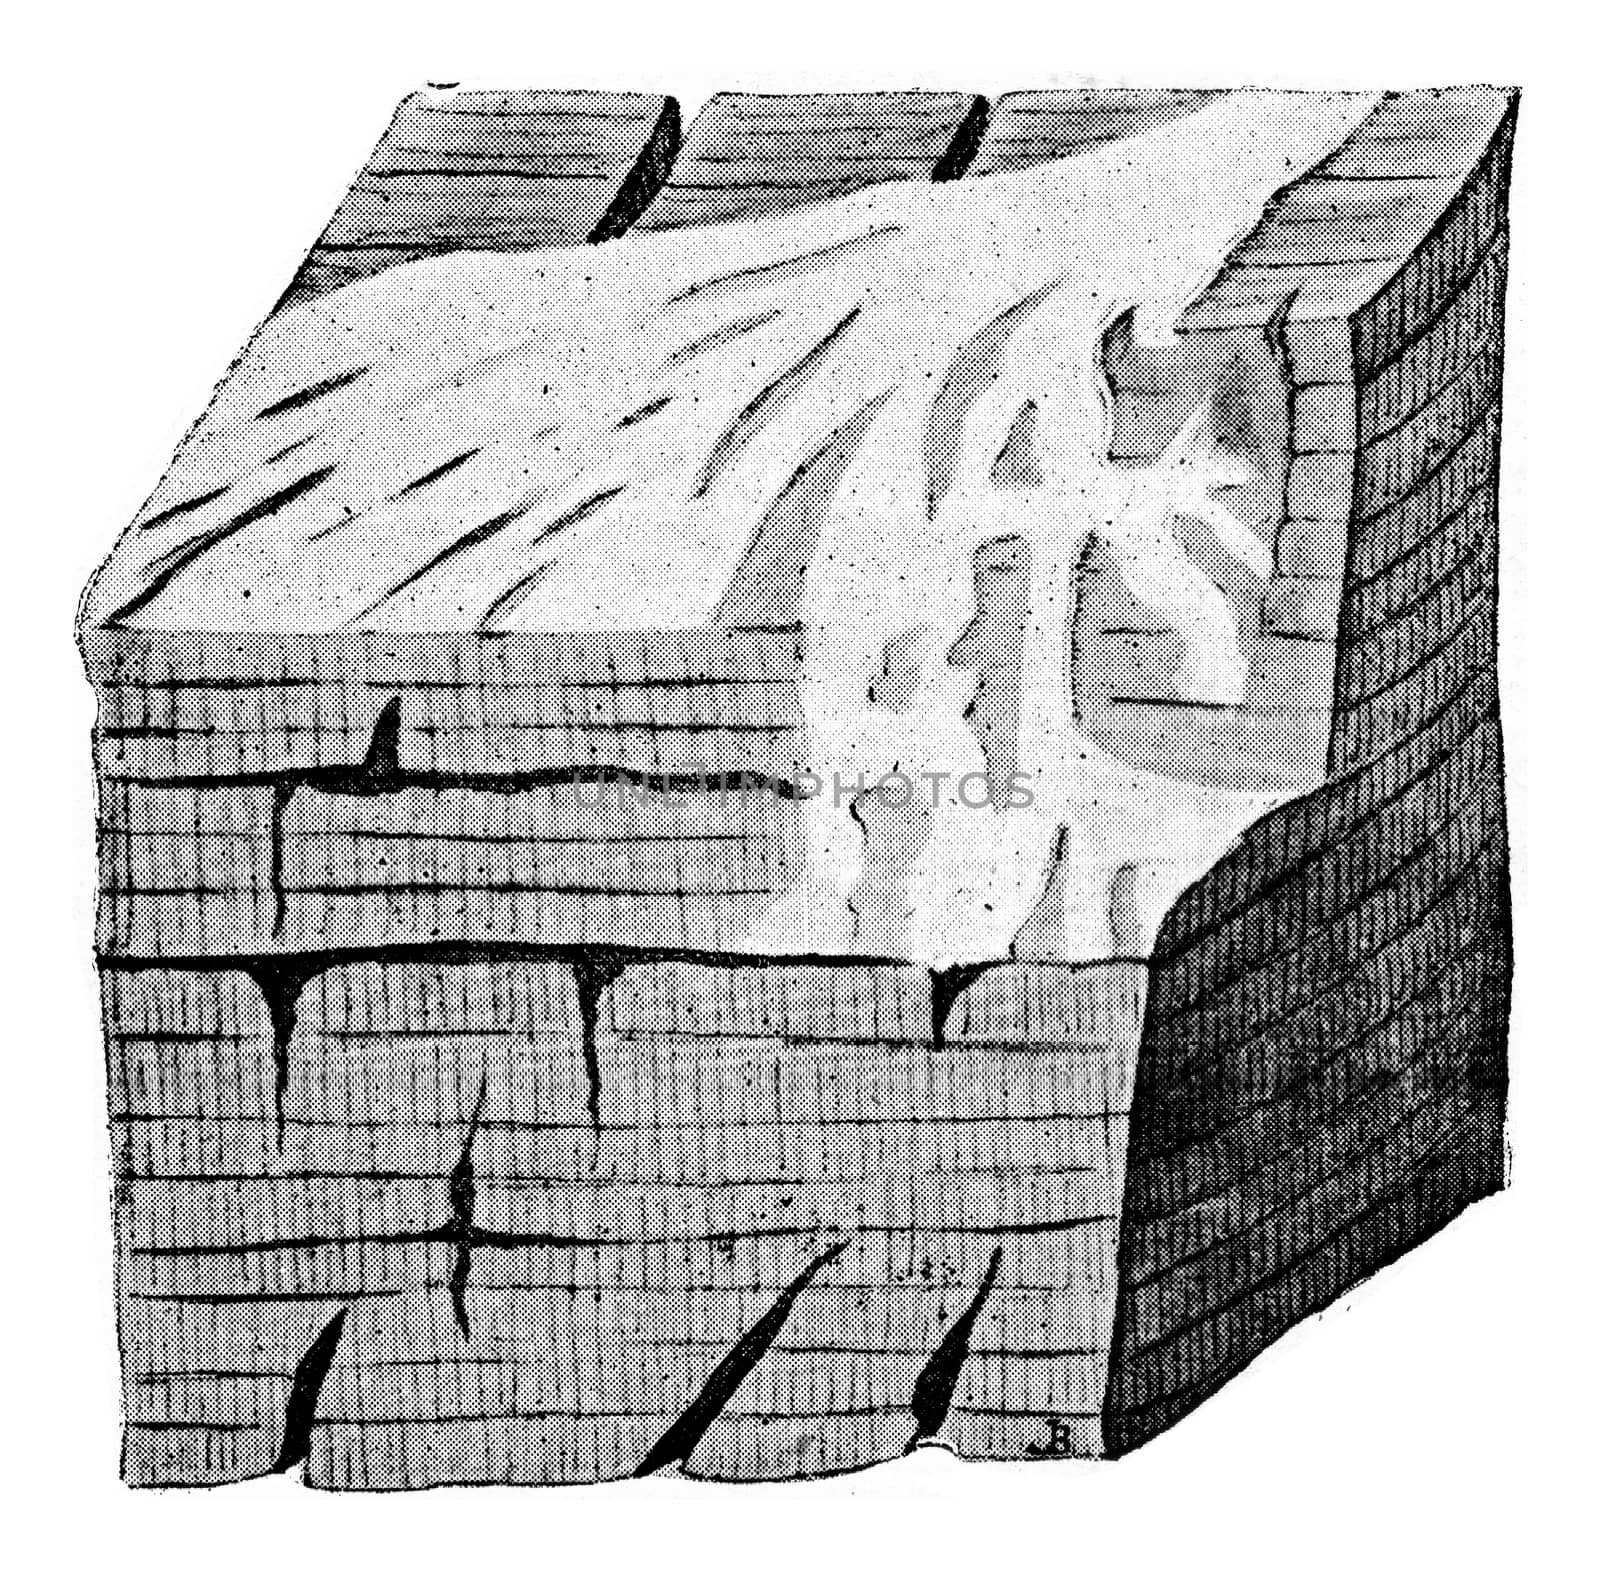 Wood invaded by the mycelium of Polyporus vaporarius, vintage engraved illustration.
